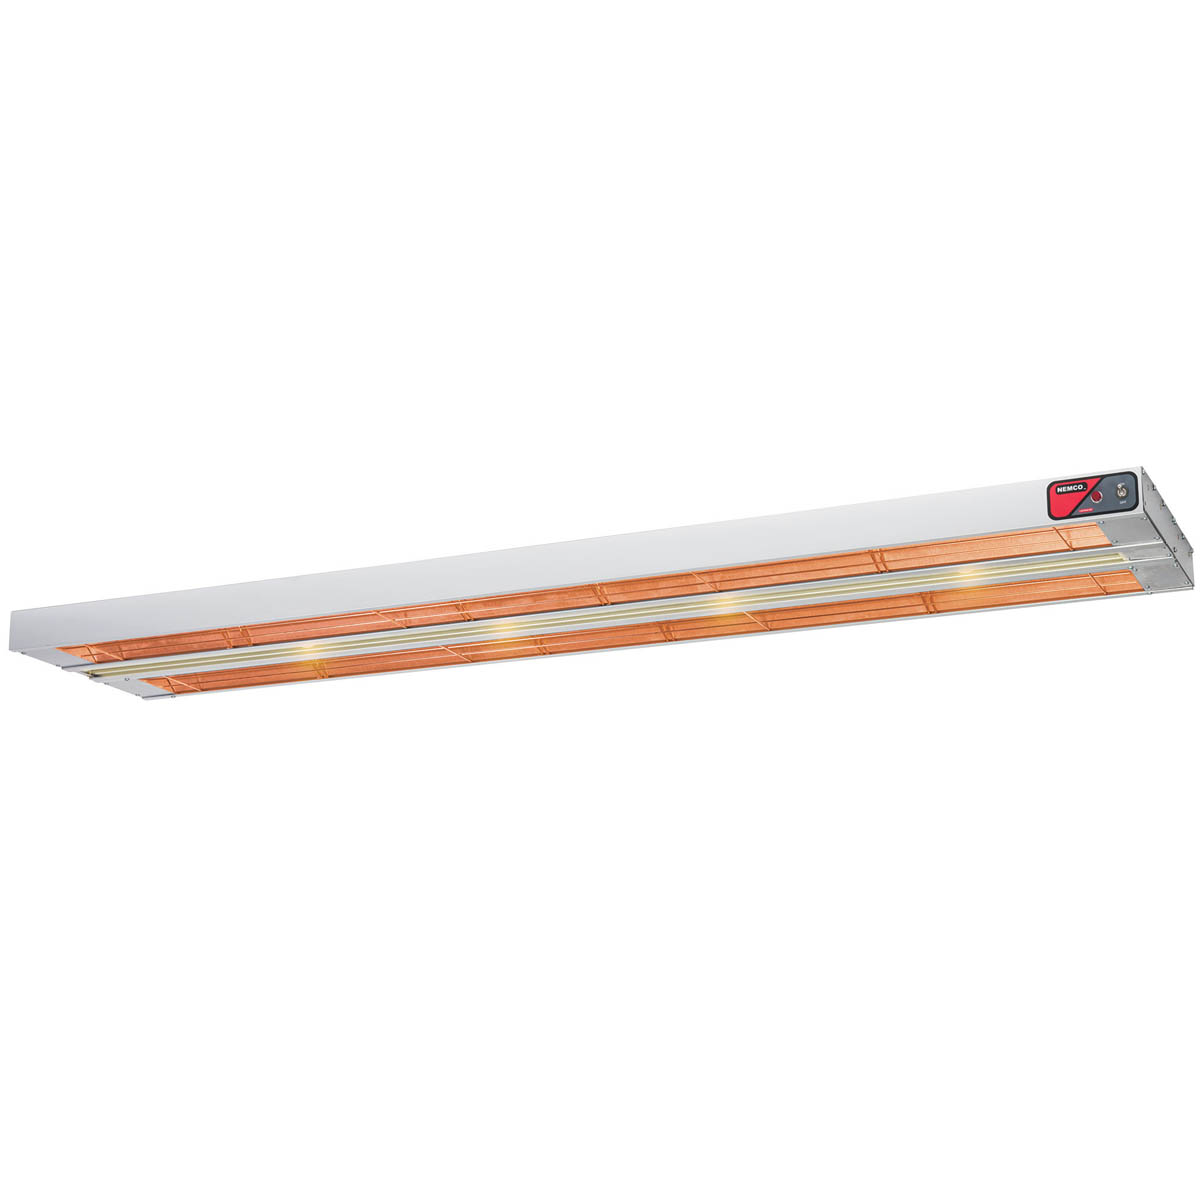 Nemco 6150-72-DL-208 Strip Type Heat Lamp